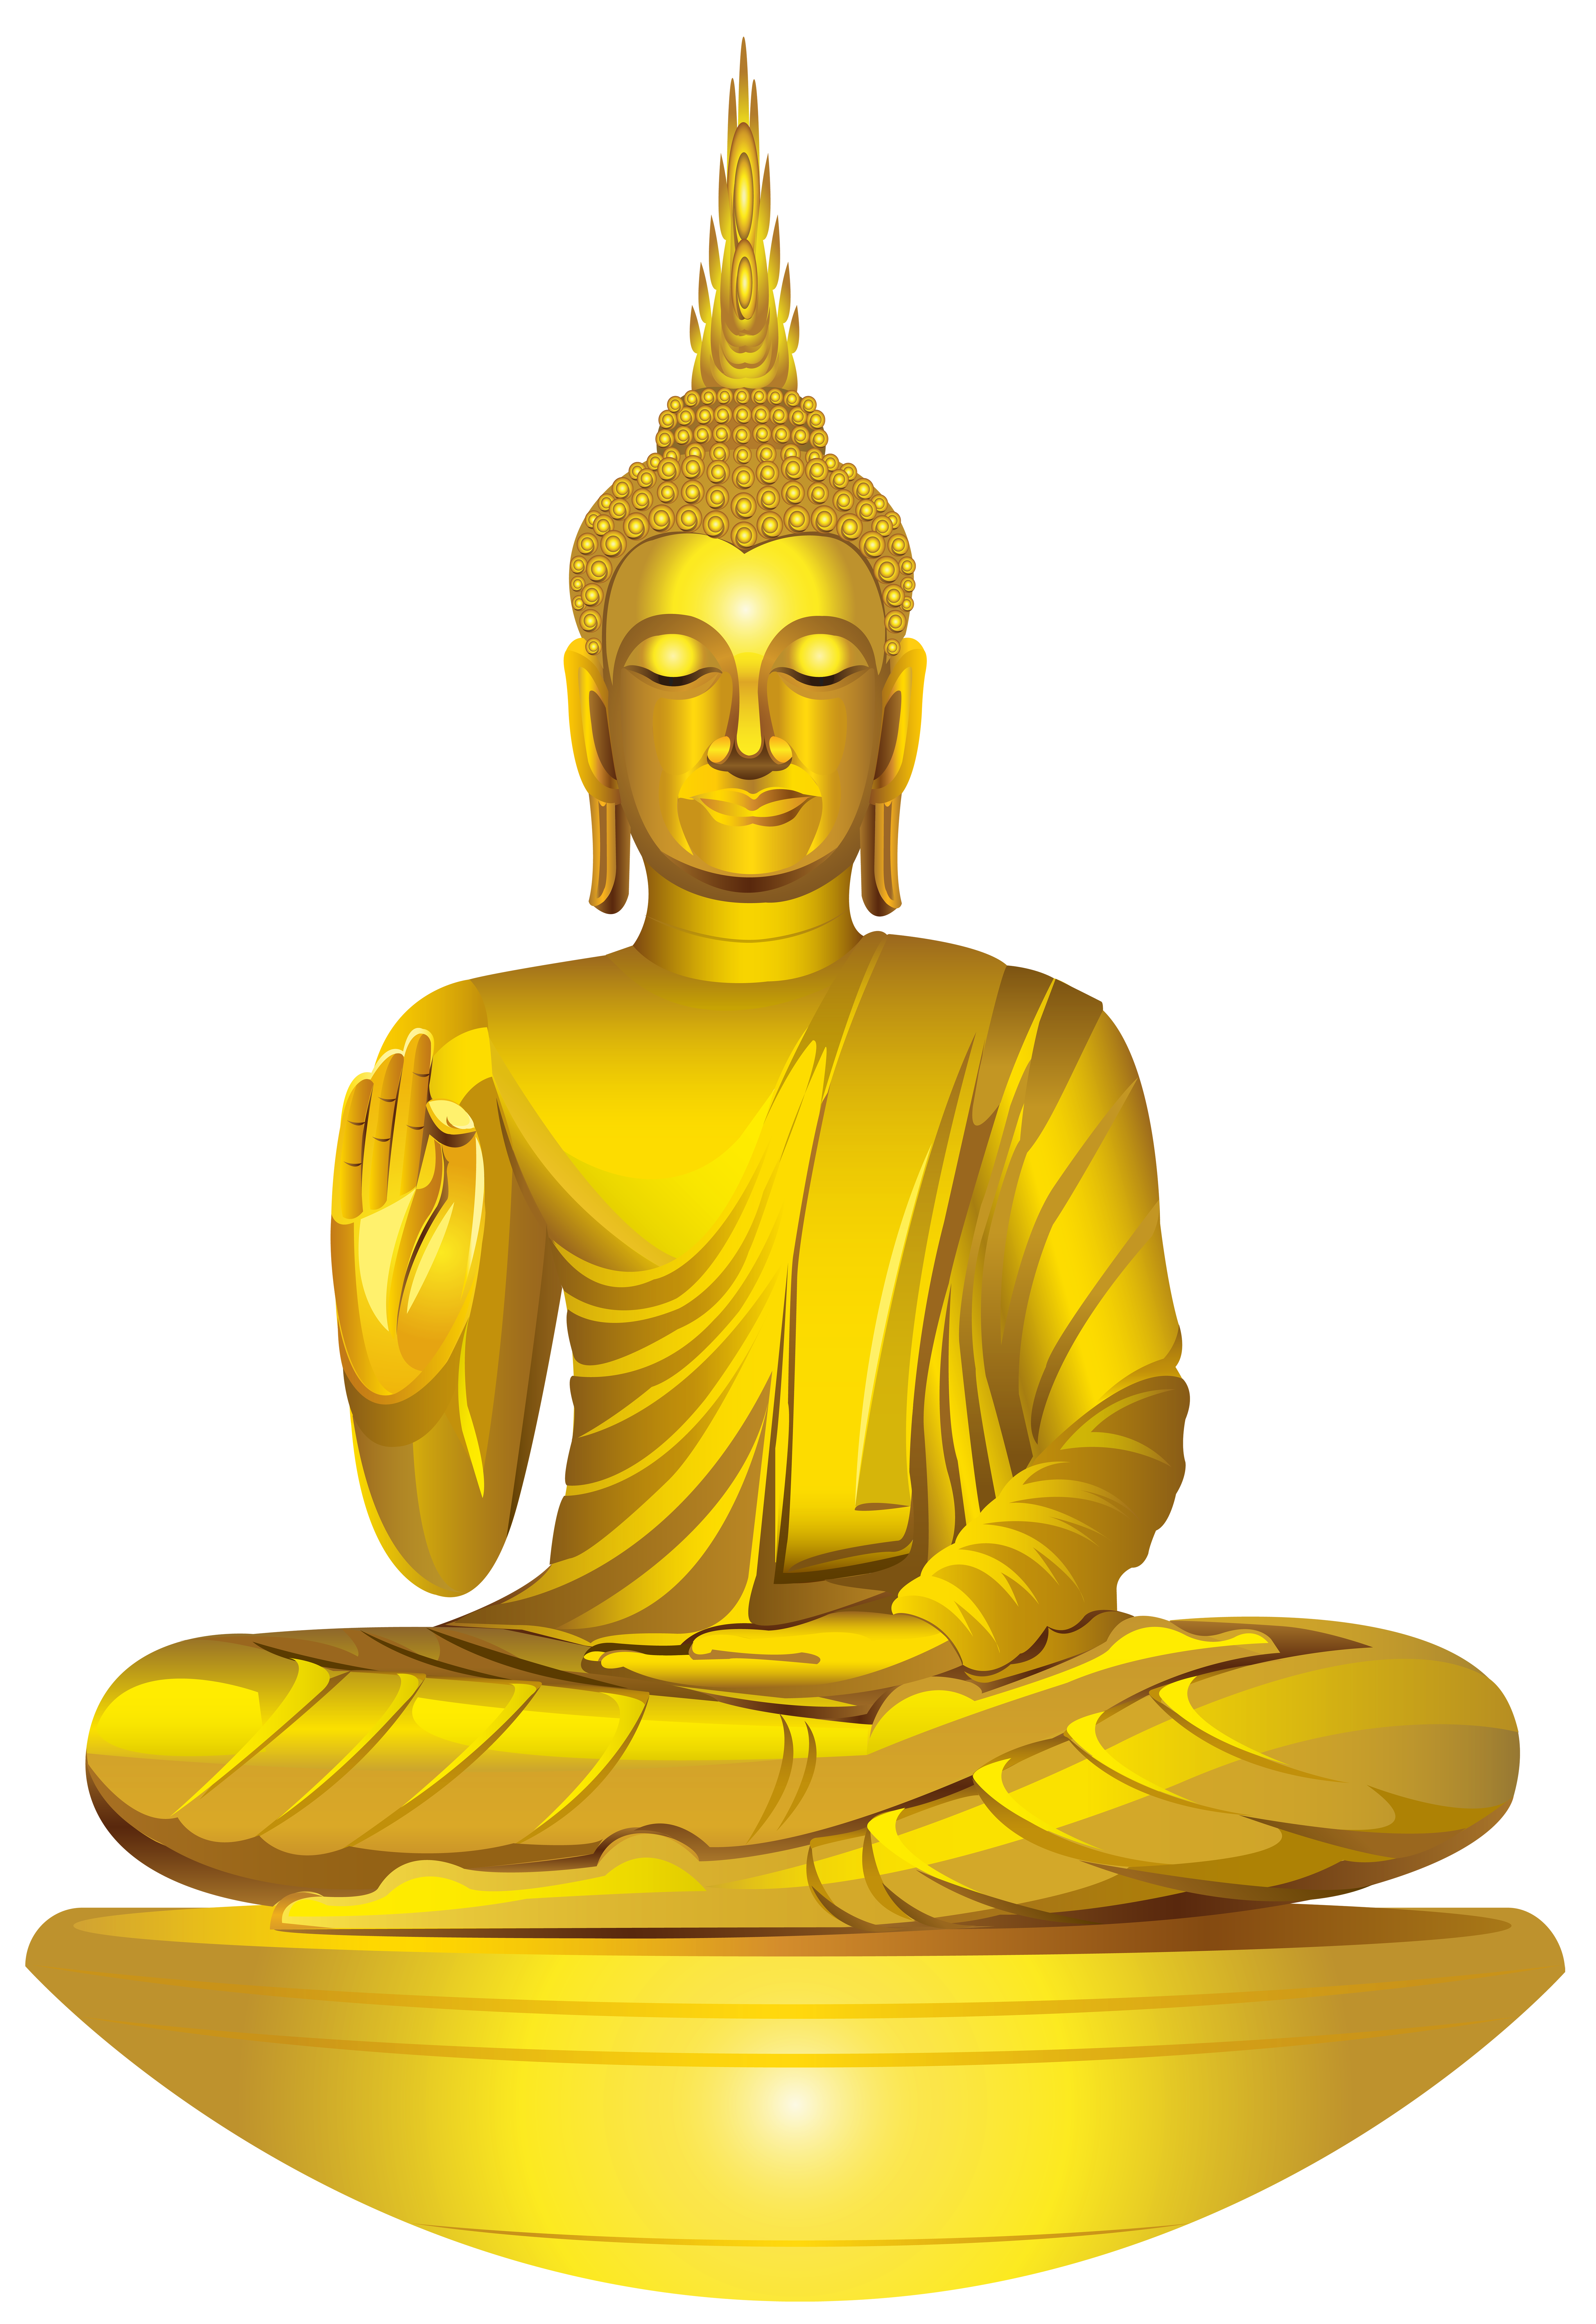 buddha clipart statue buddha